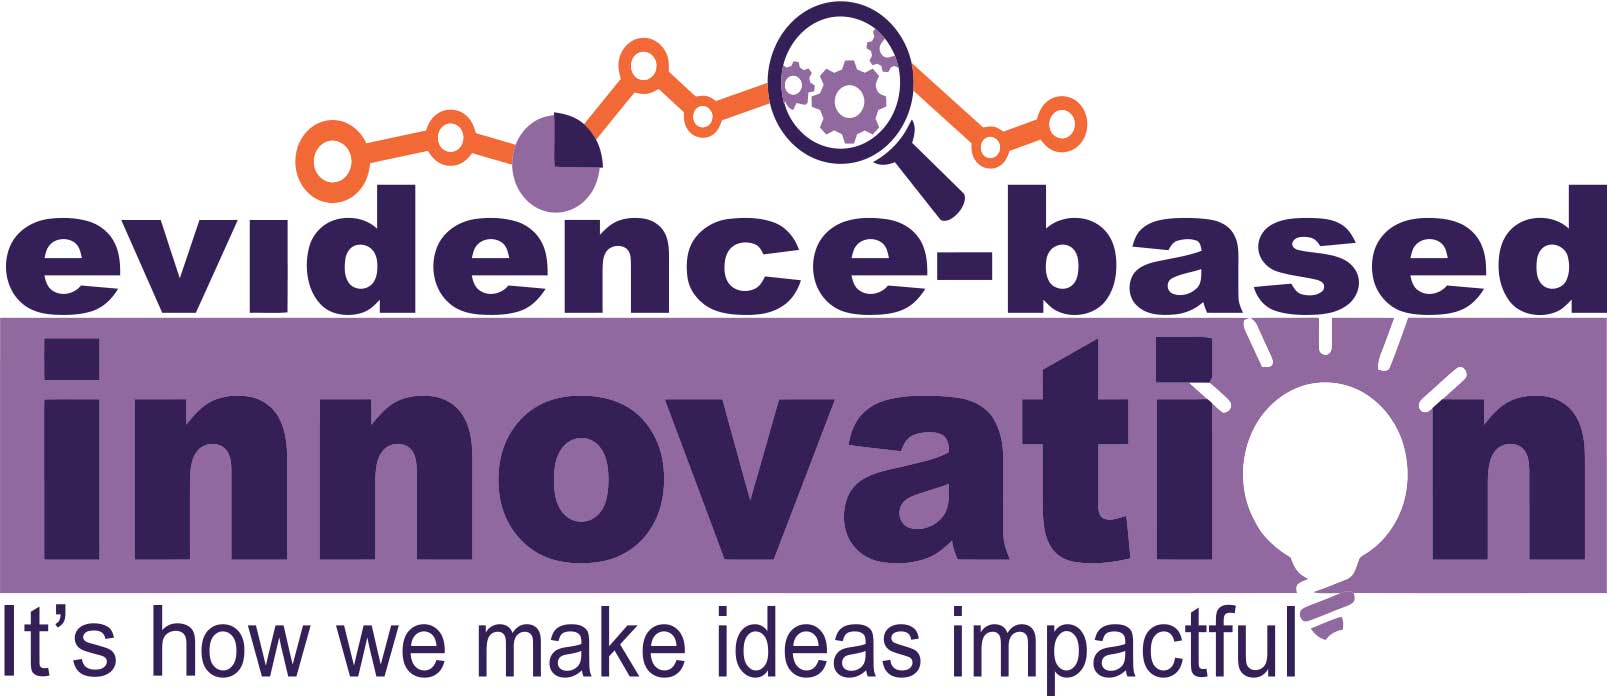 Evidence-based Innovation: It's how Devi makes ideas impactful